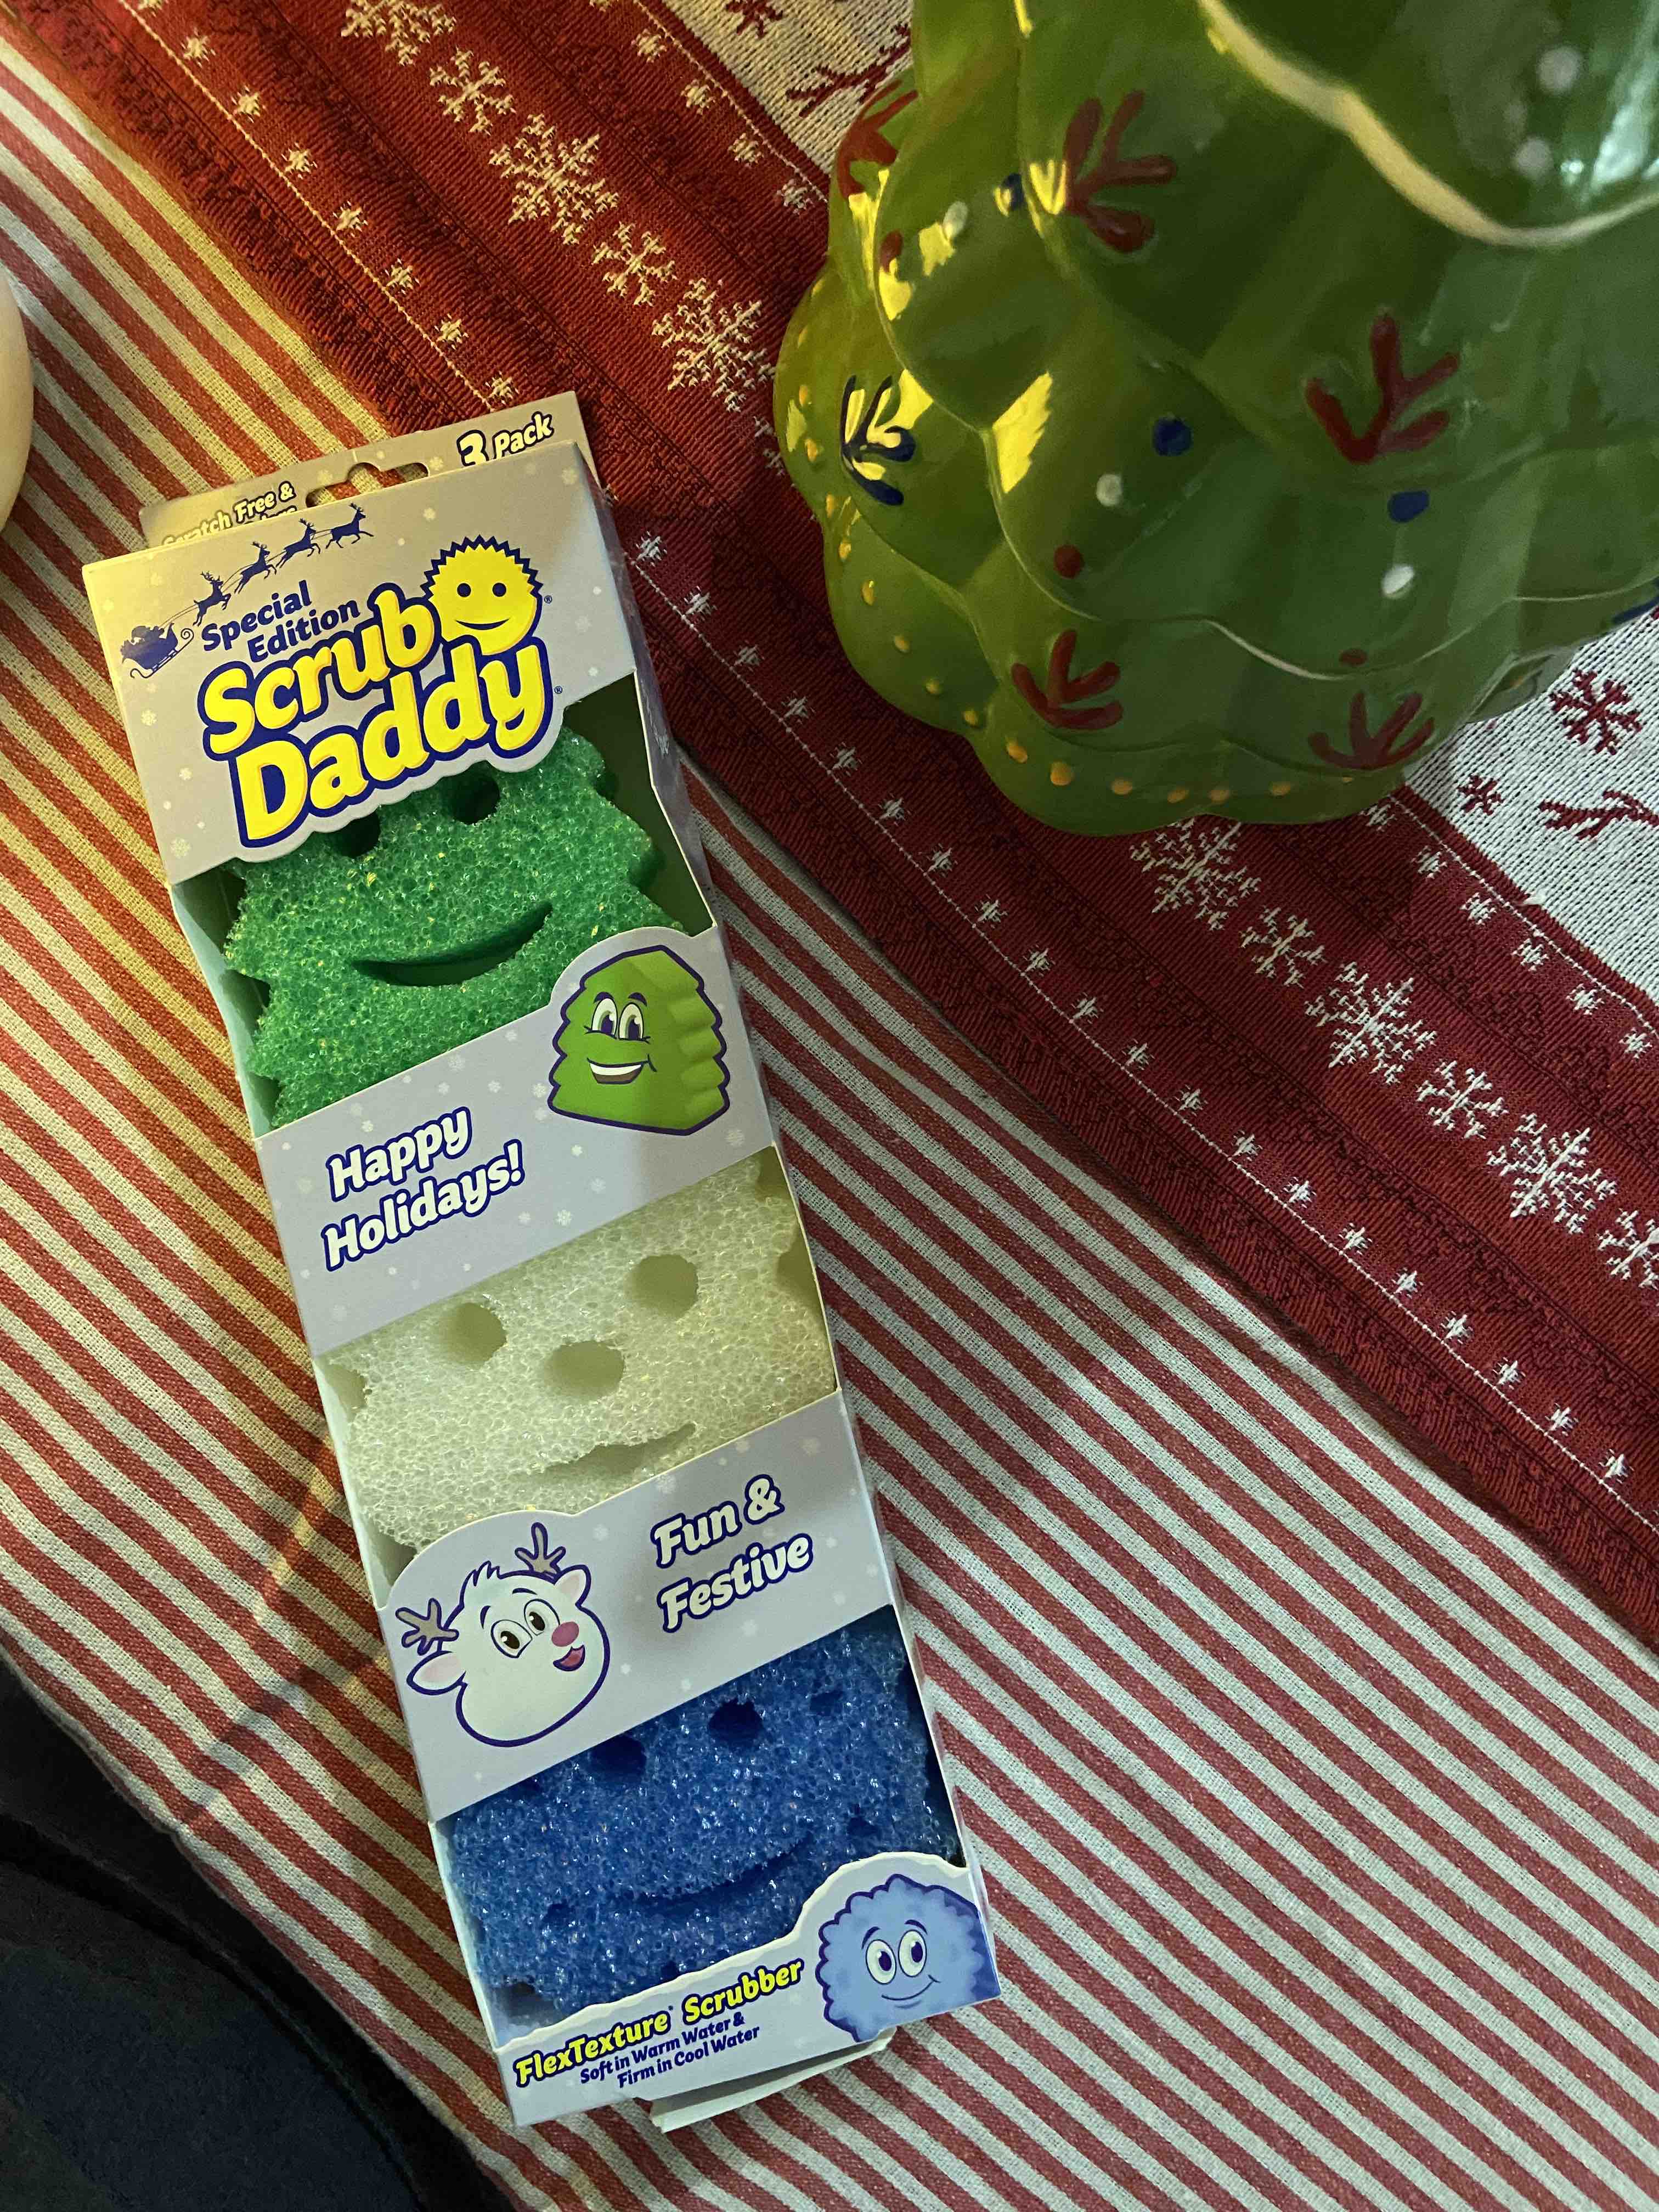 New Scrub Daddy Christmas Reindeer Sponge Special Edition